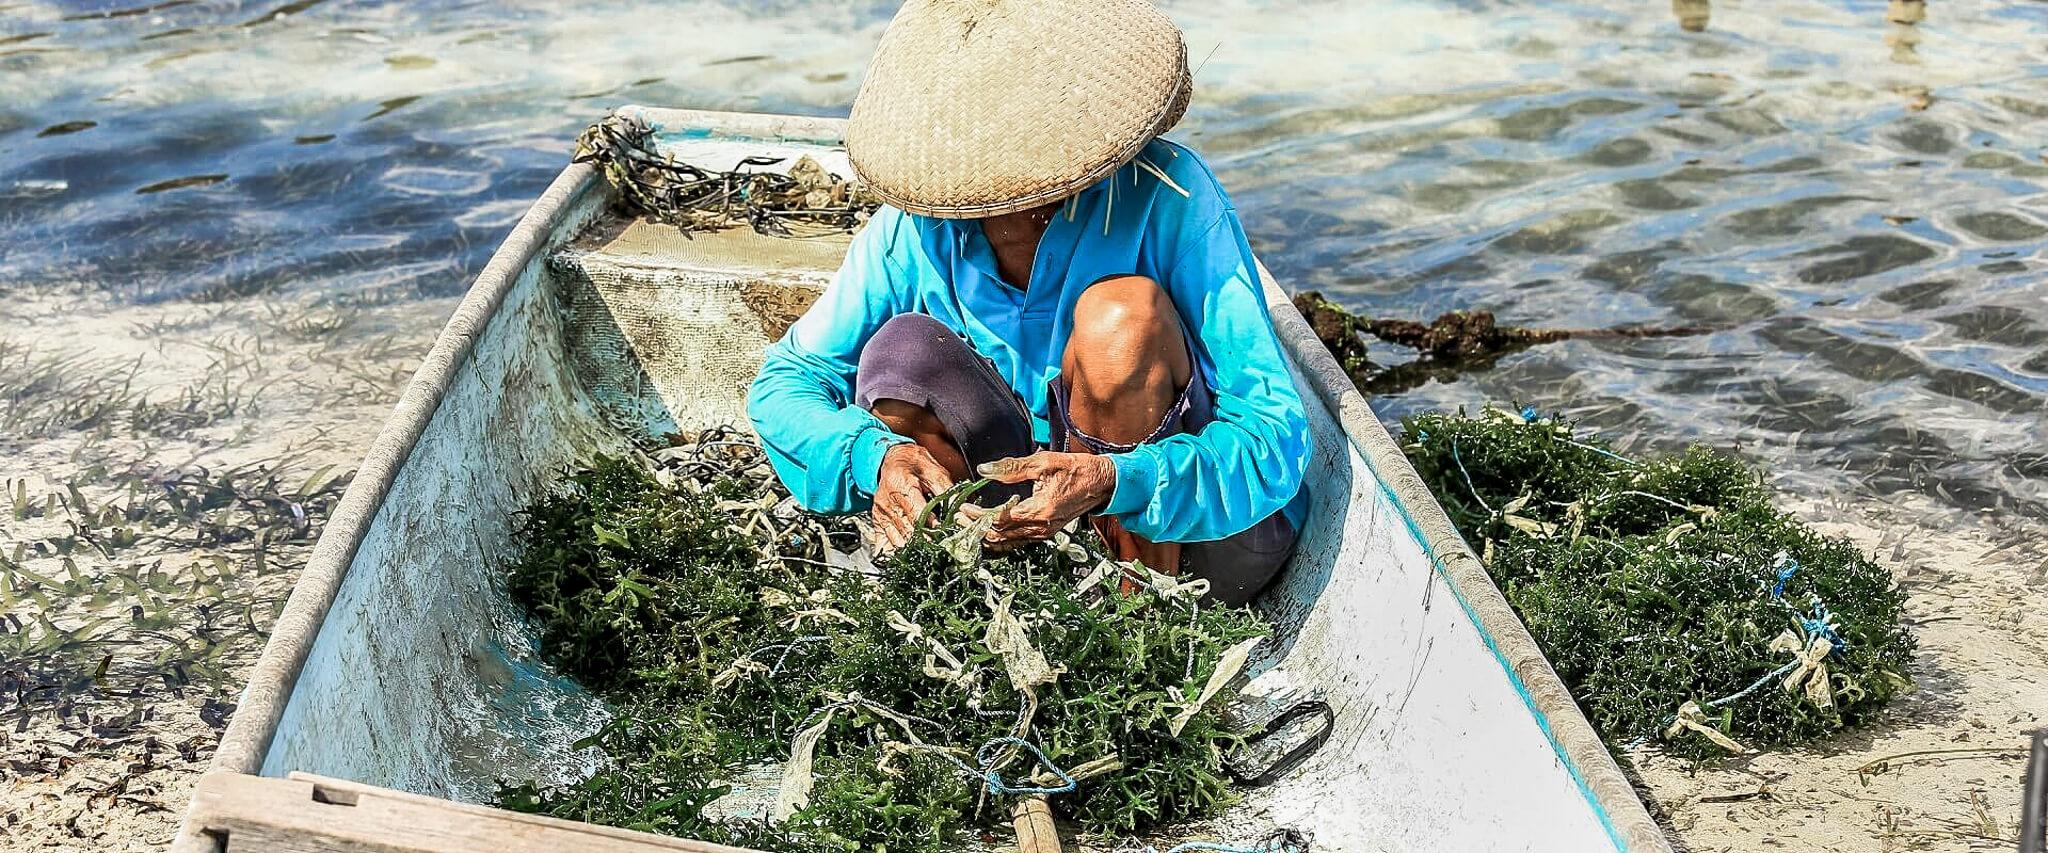 Farmer collecting superfood seaweed at seaweed farm close to coast